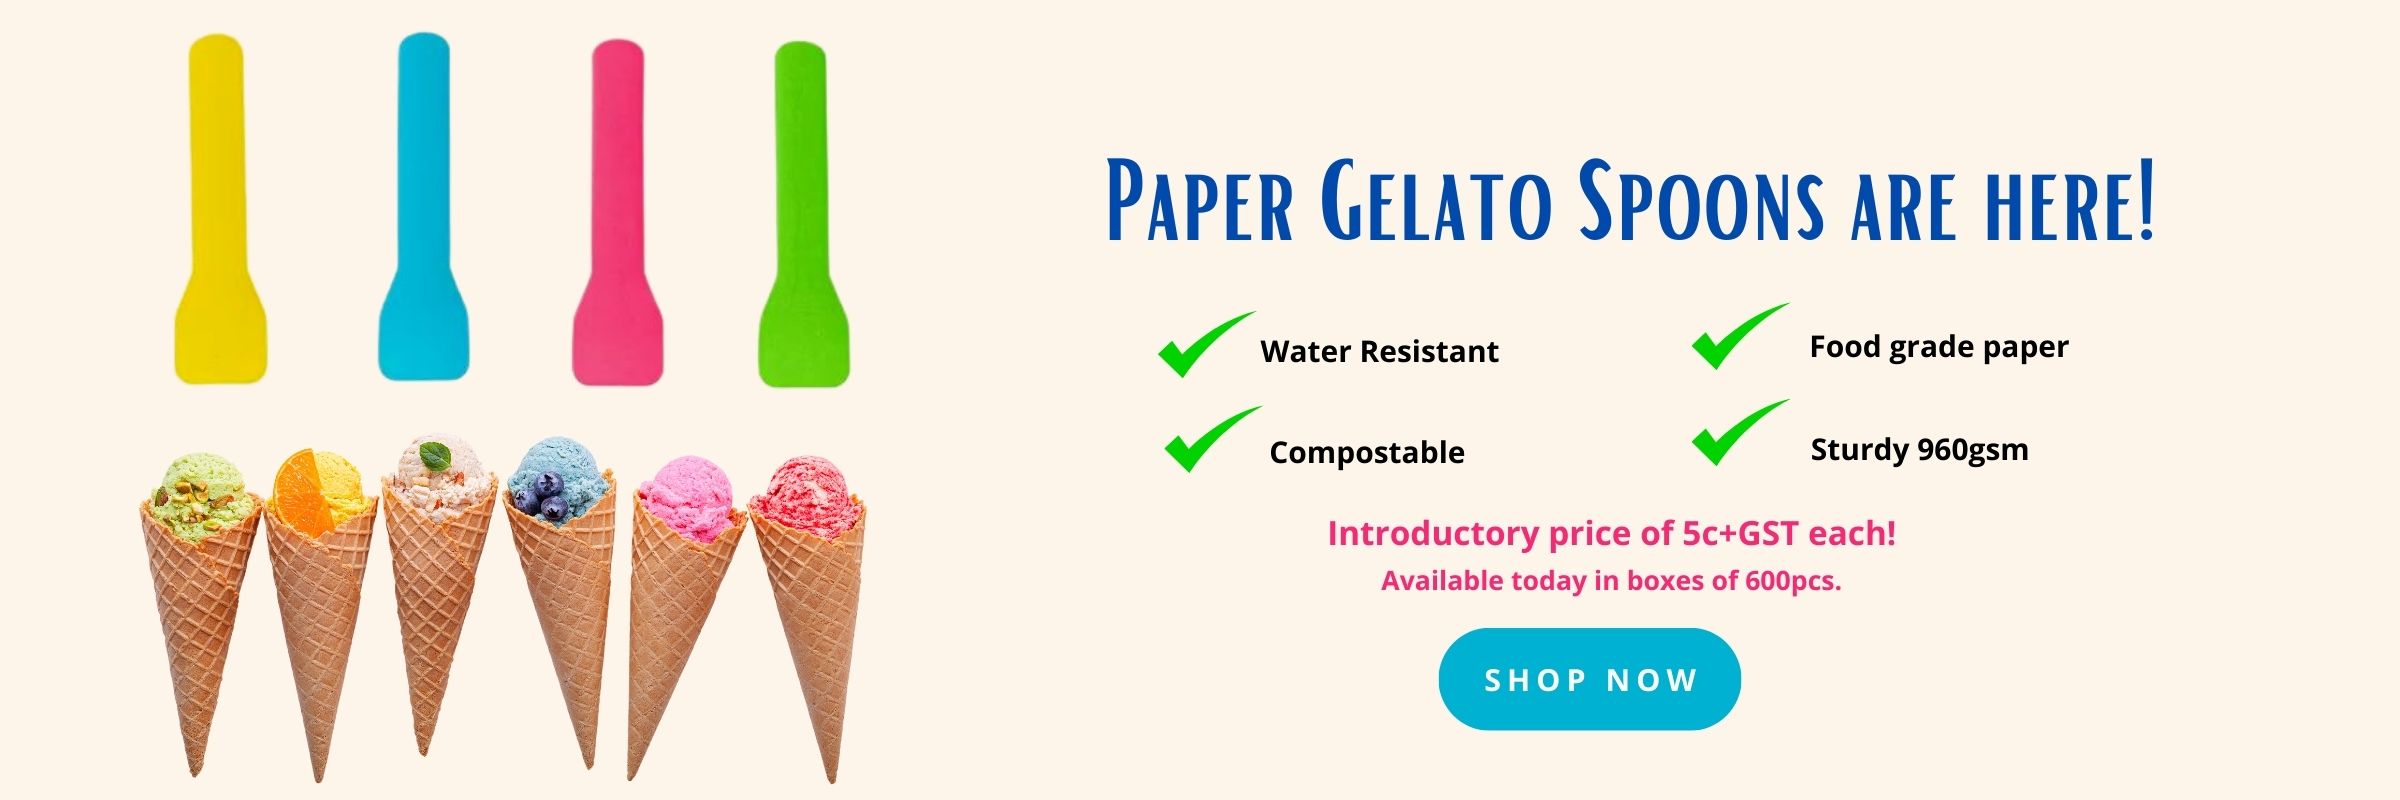 Paper Gelato and Ice Cream spoons